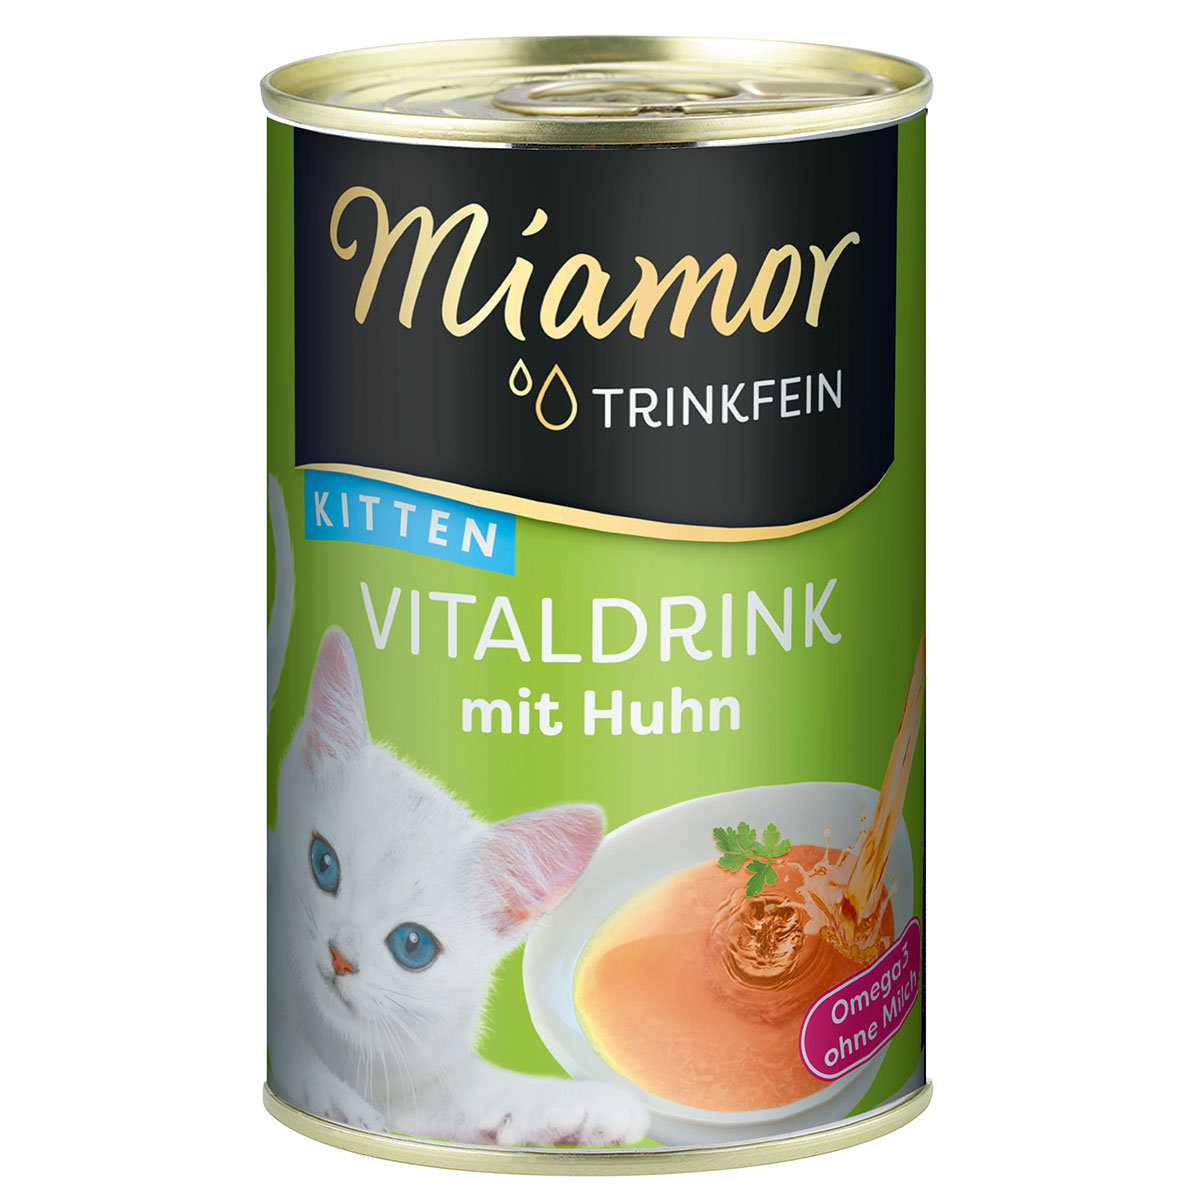 miamor trinkfein vitaldrink kitten mit huhn 135ml5f9fdba154d90